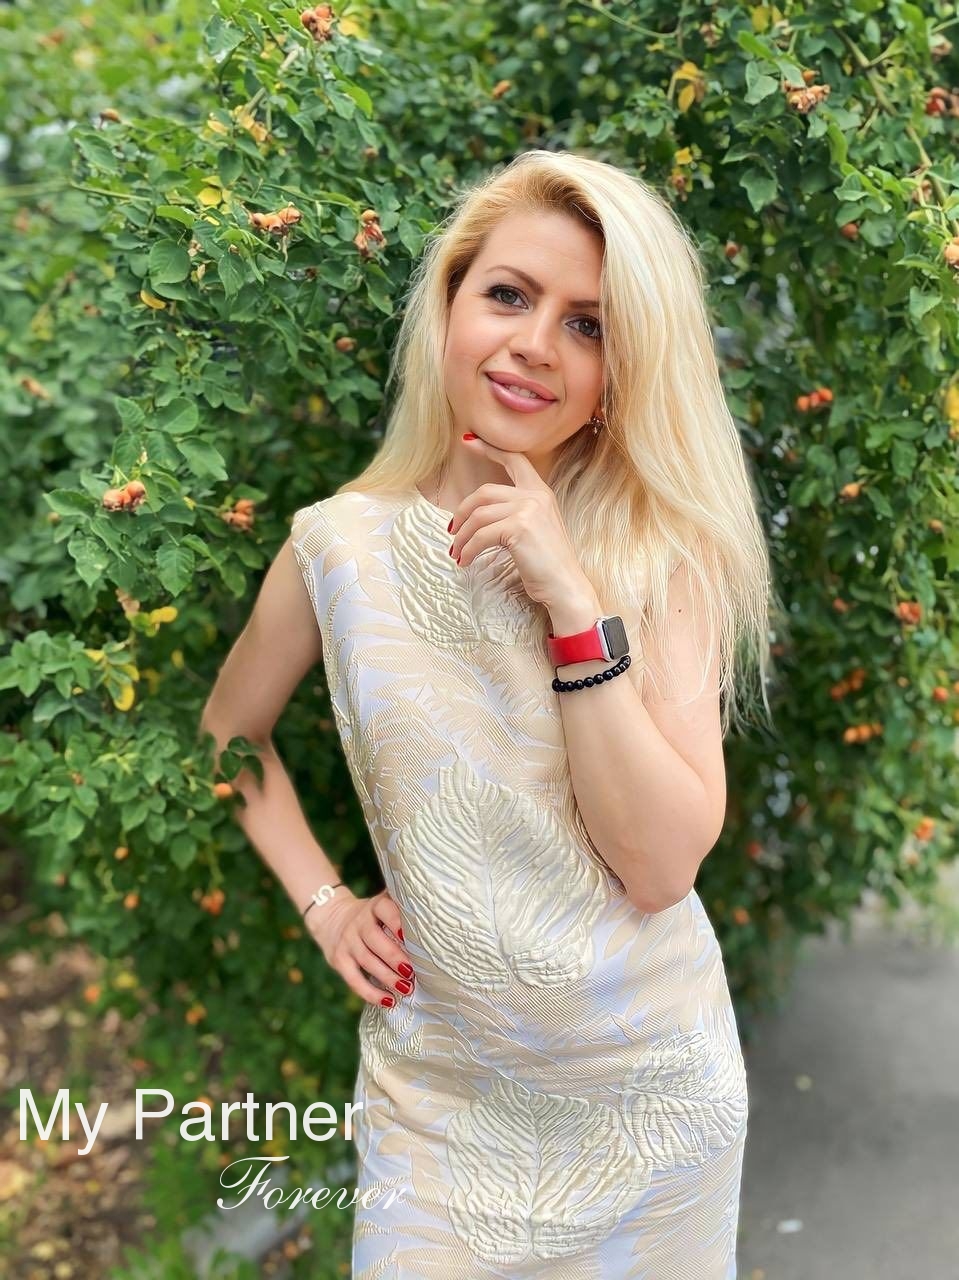 Dating Service to Meet Single Ukrainian Girl Ekaterina from Odessa, Ukraine